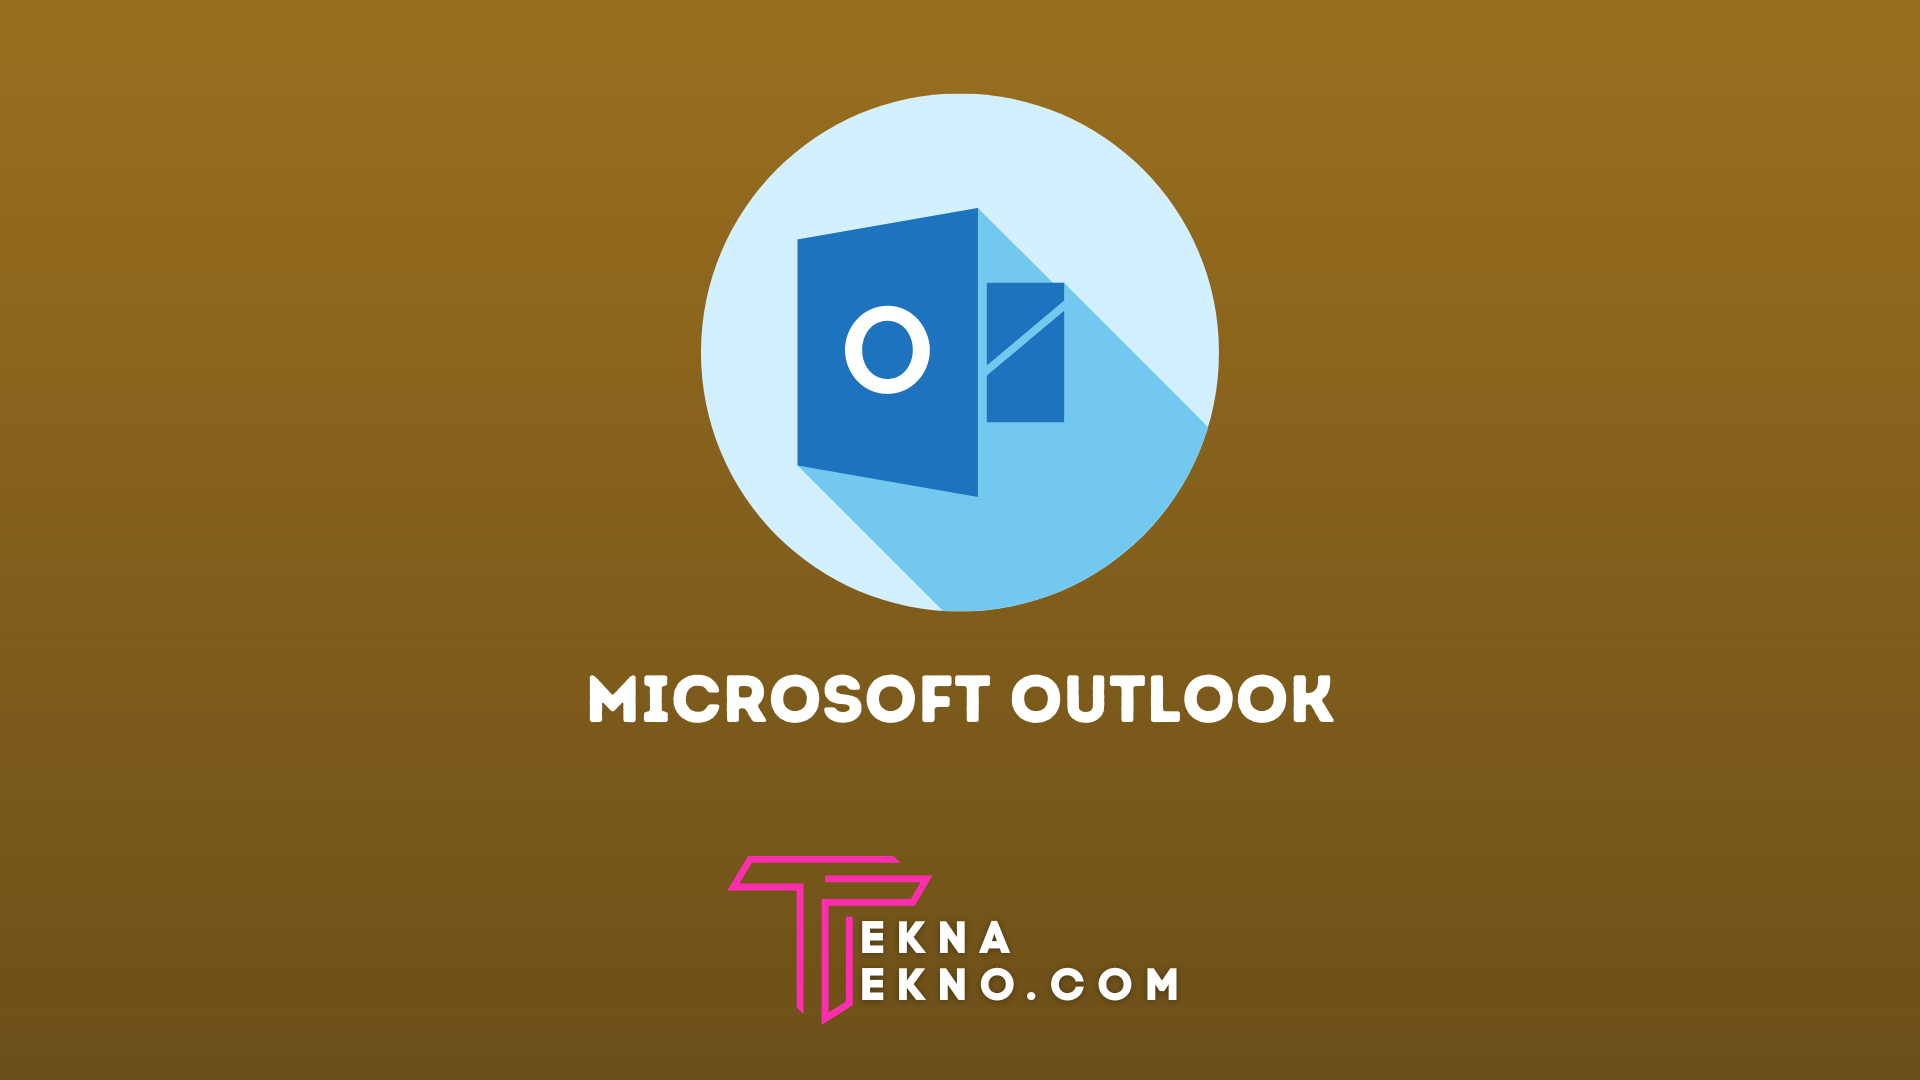 Microsoft Outlook: Pengertian, Fungsi dan Cara Menggunakannya